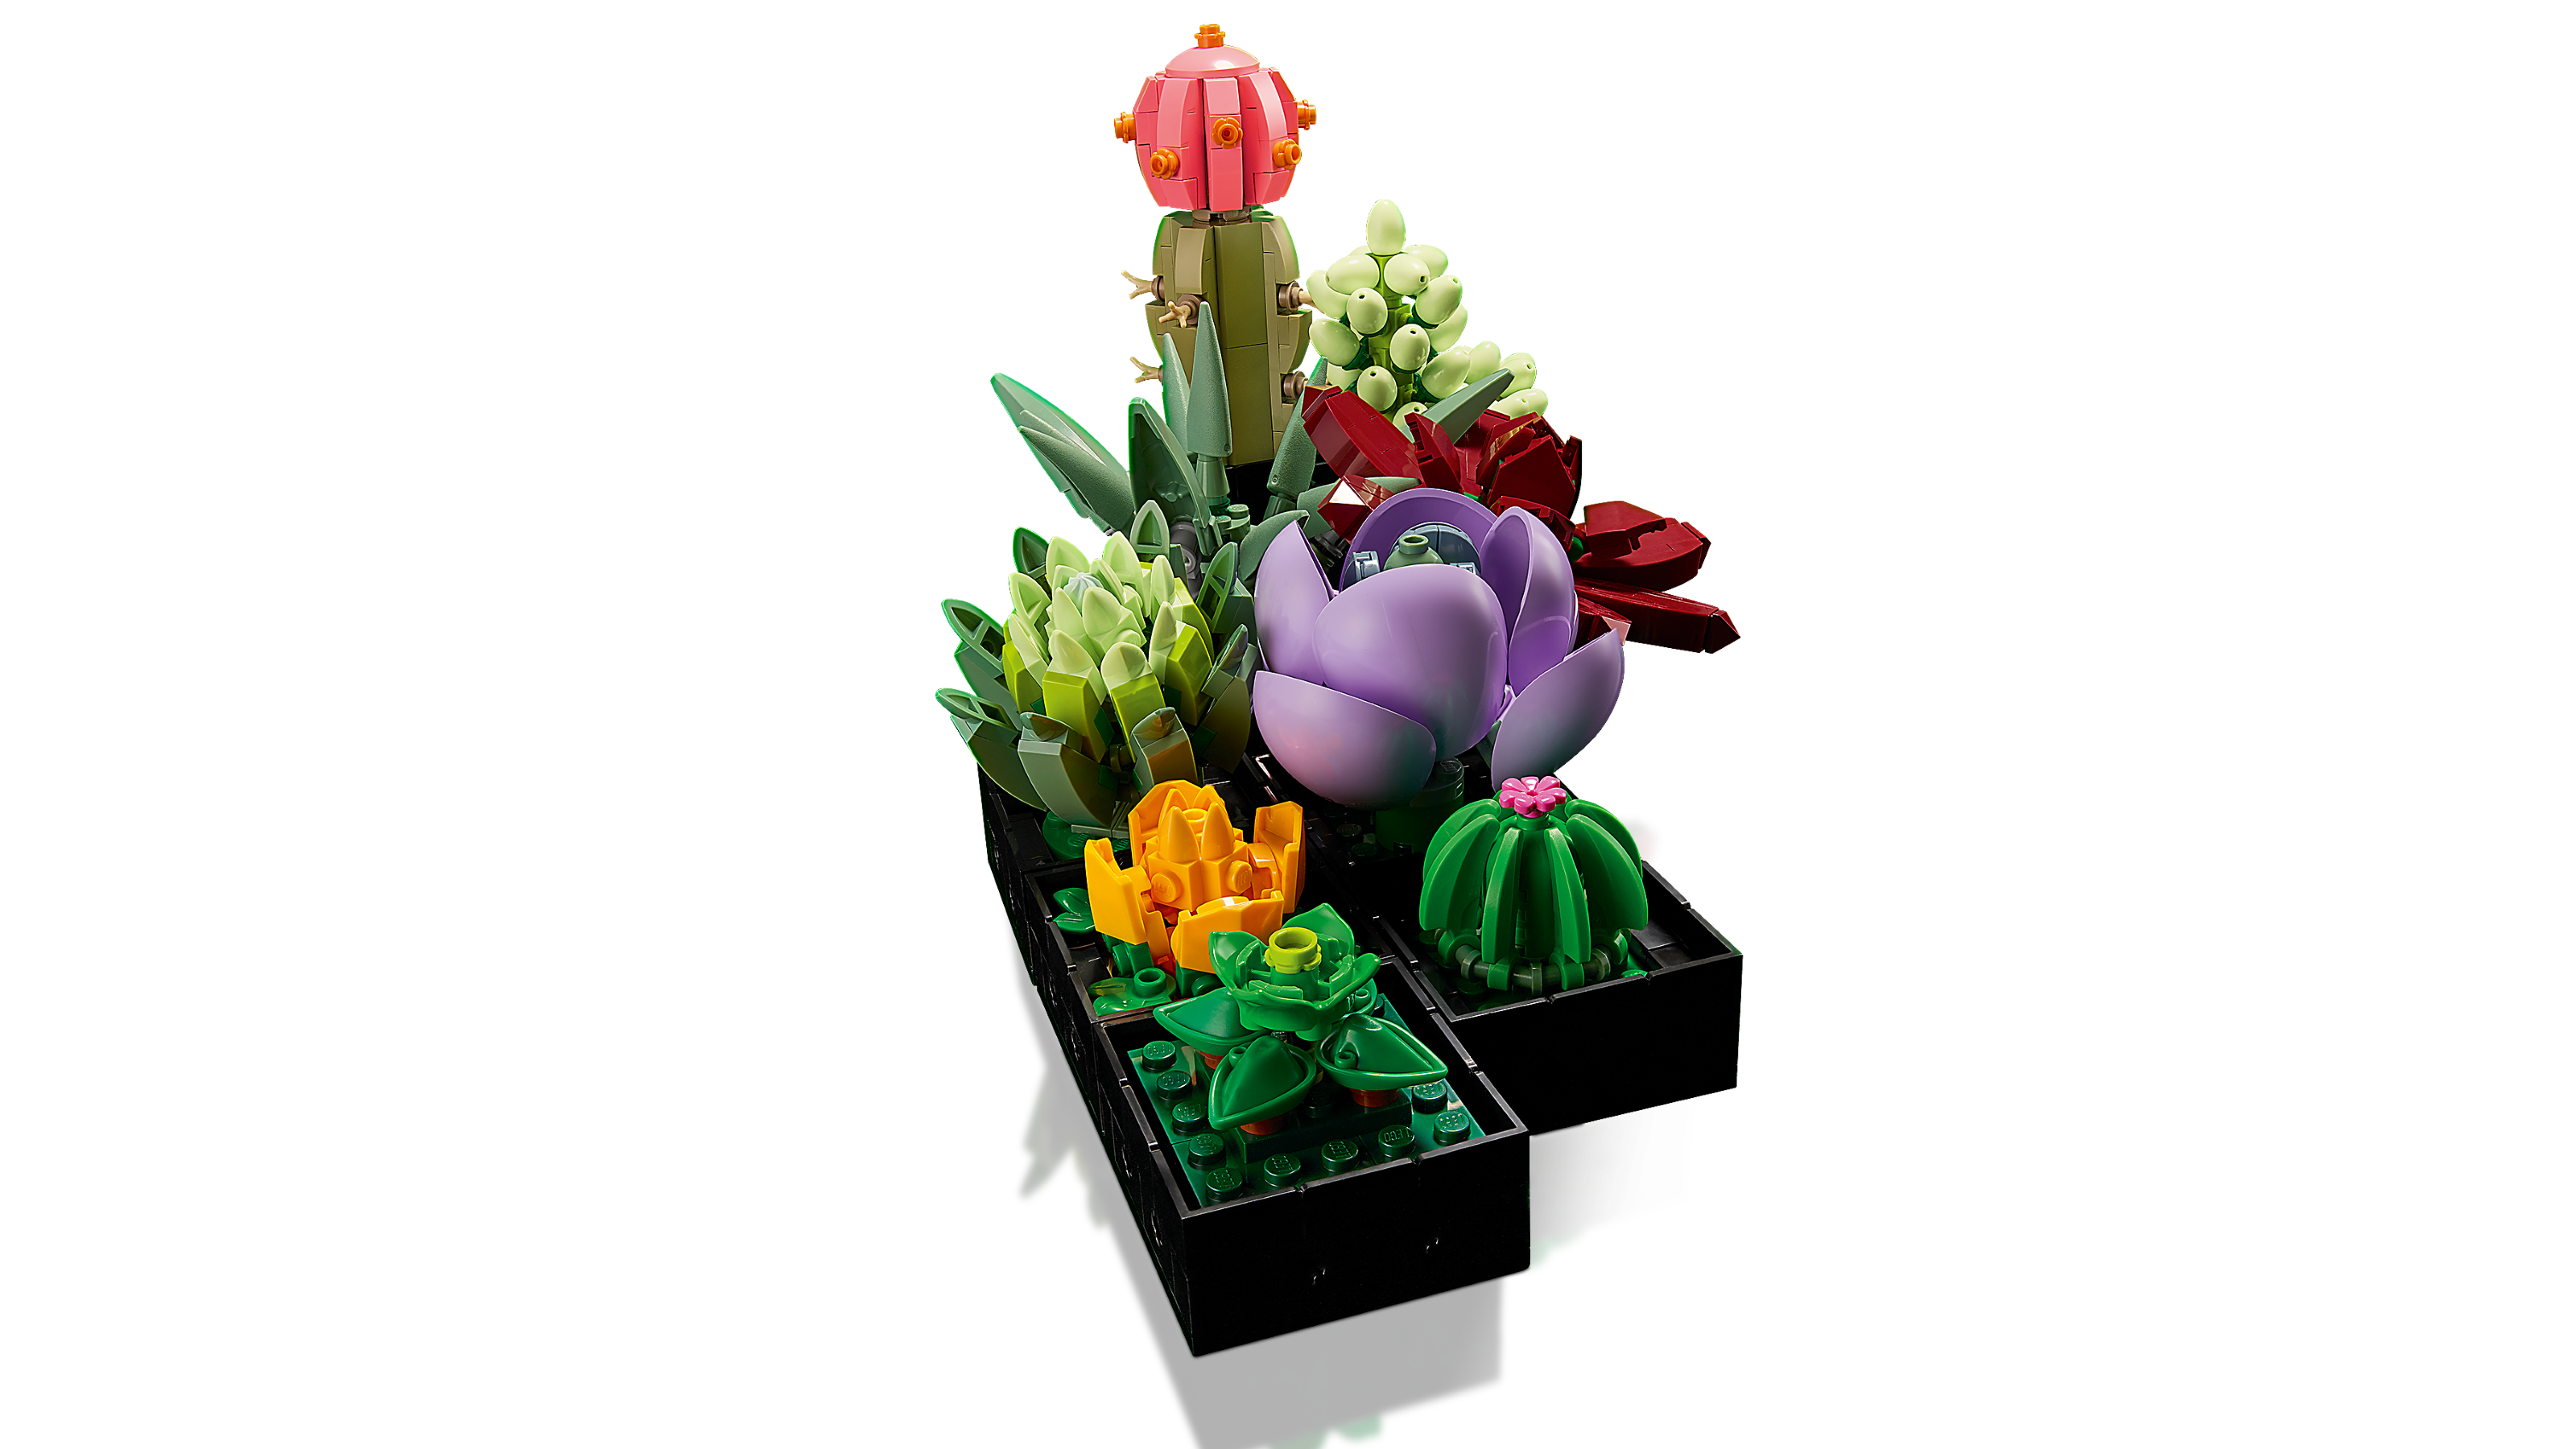 Les succulentes 10309, LEGO® Icons